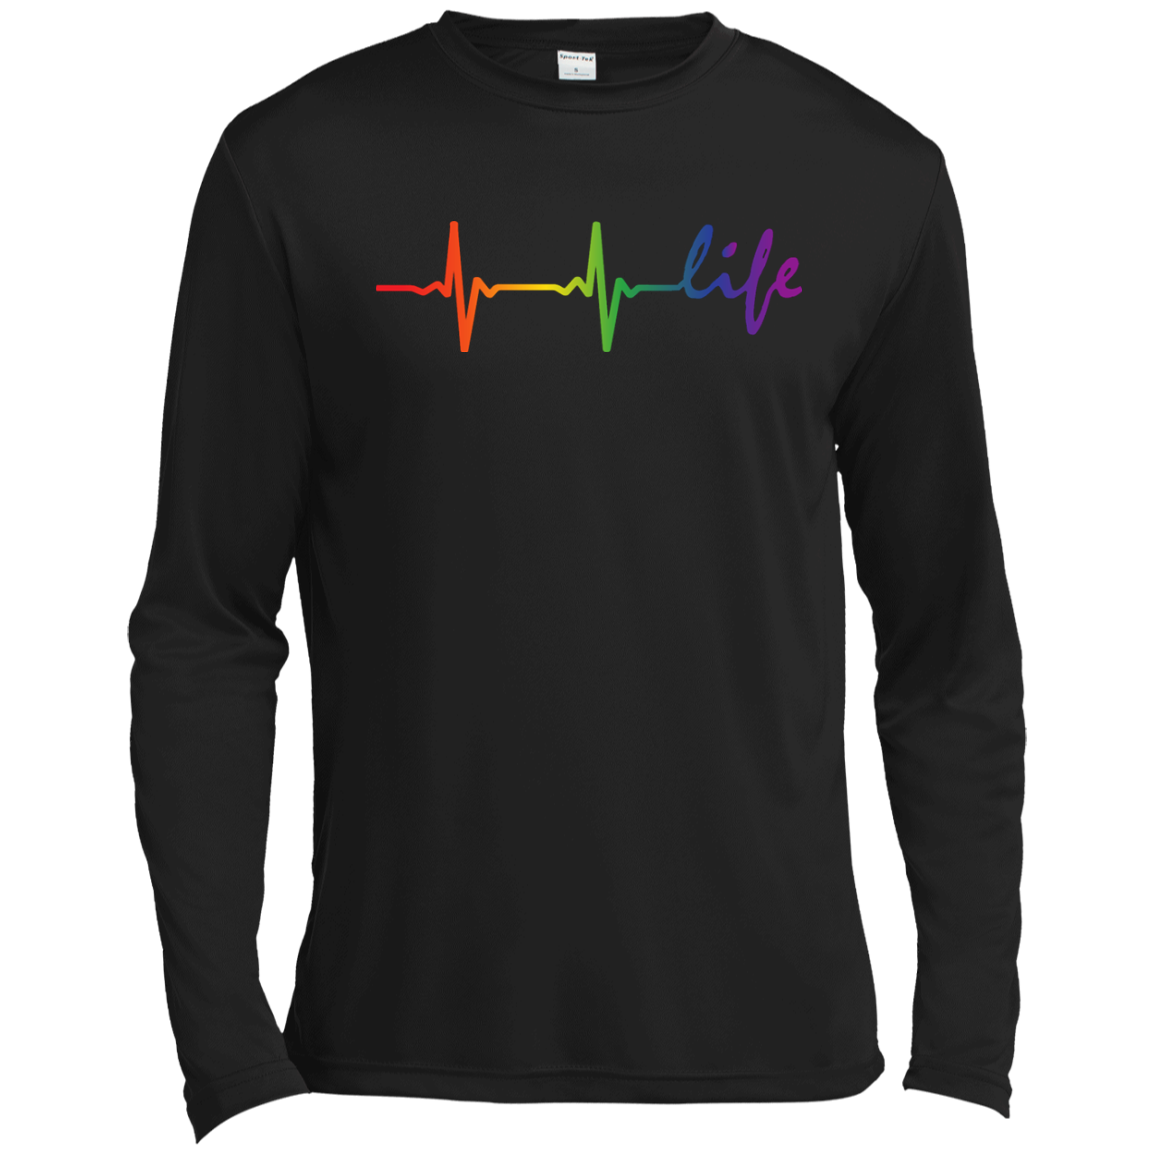 Rainbow Life Heartbeat Black Full Sleeves Shirt for Men 